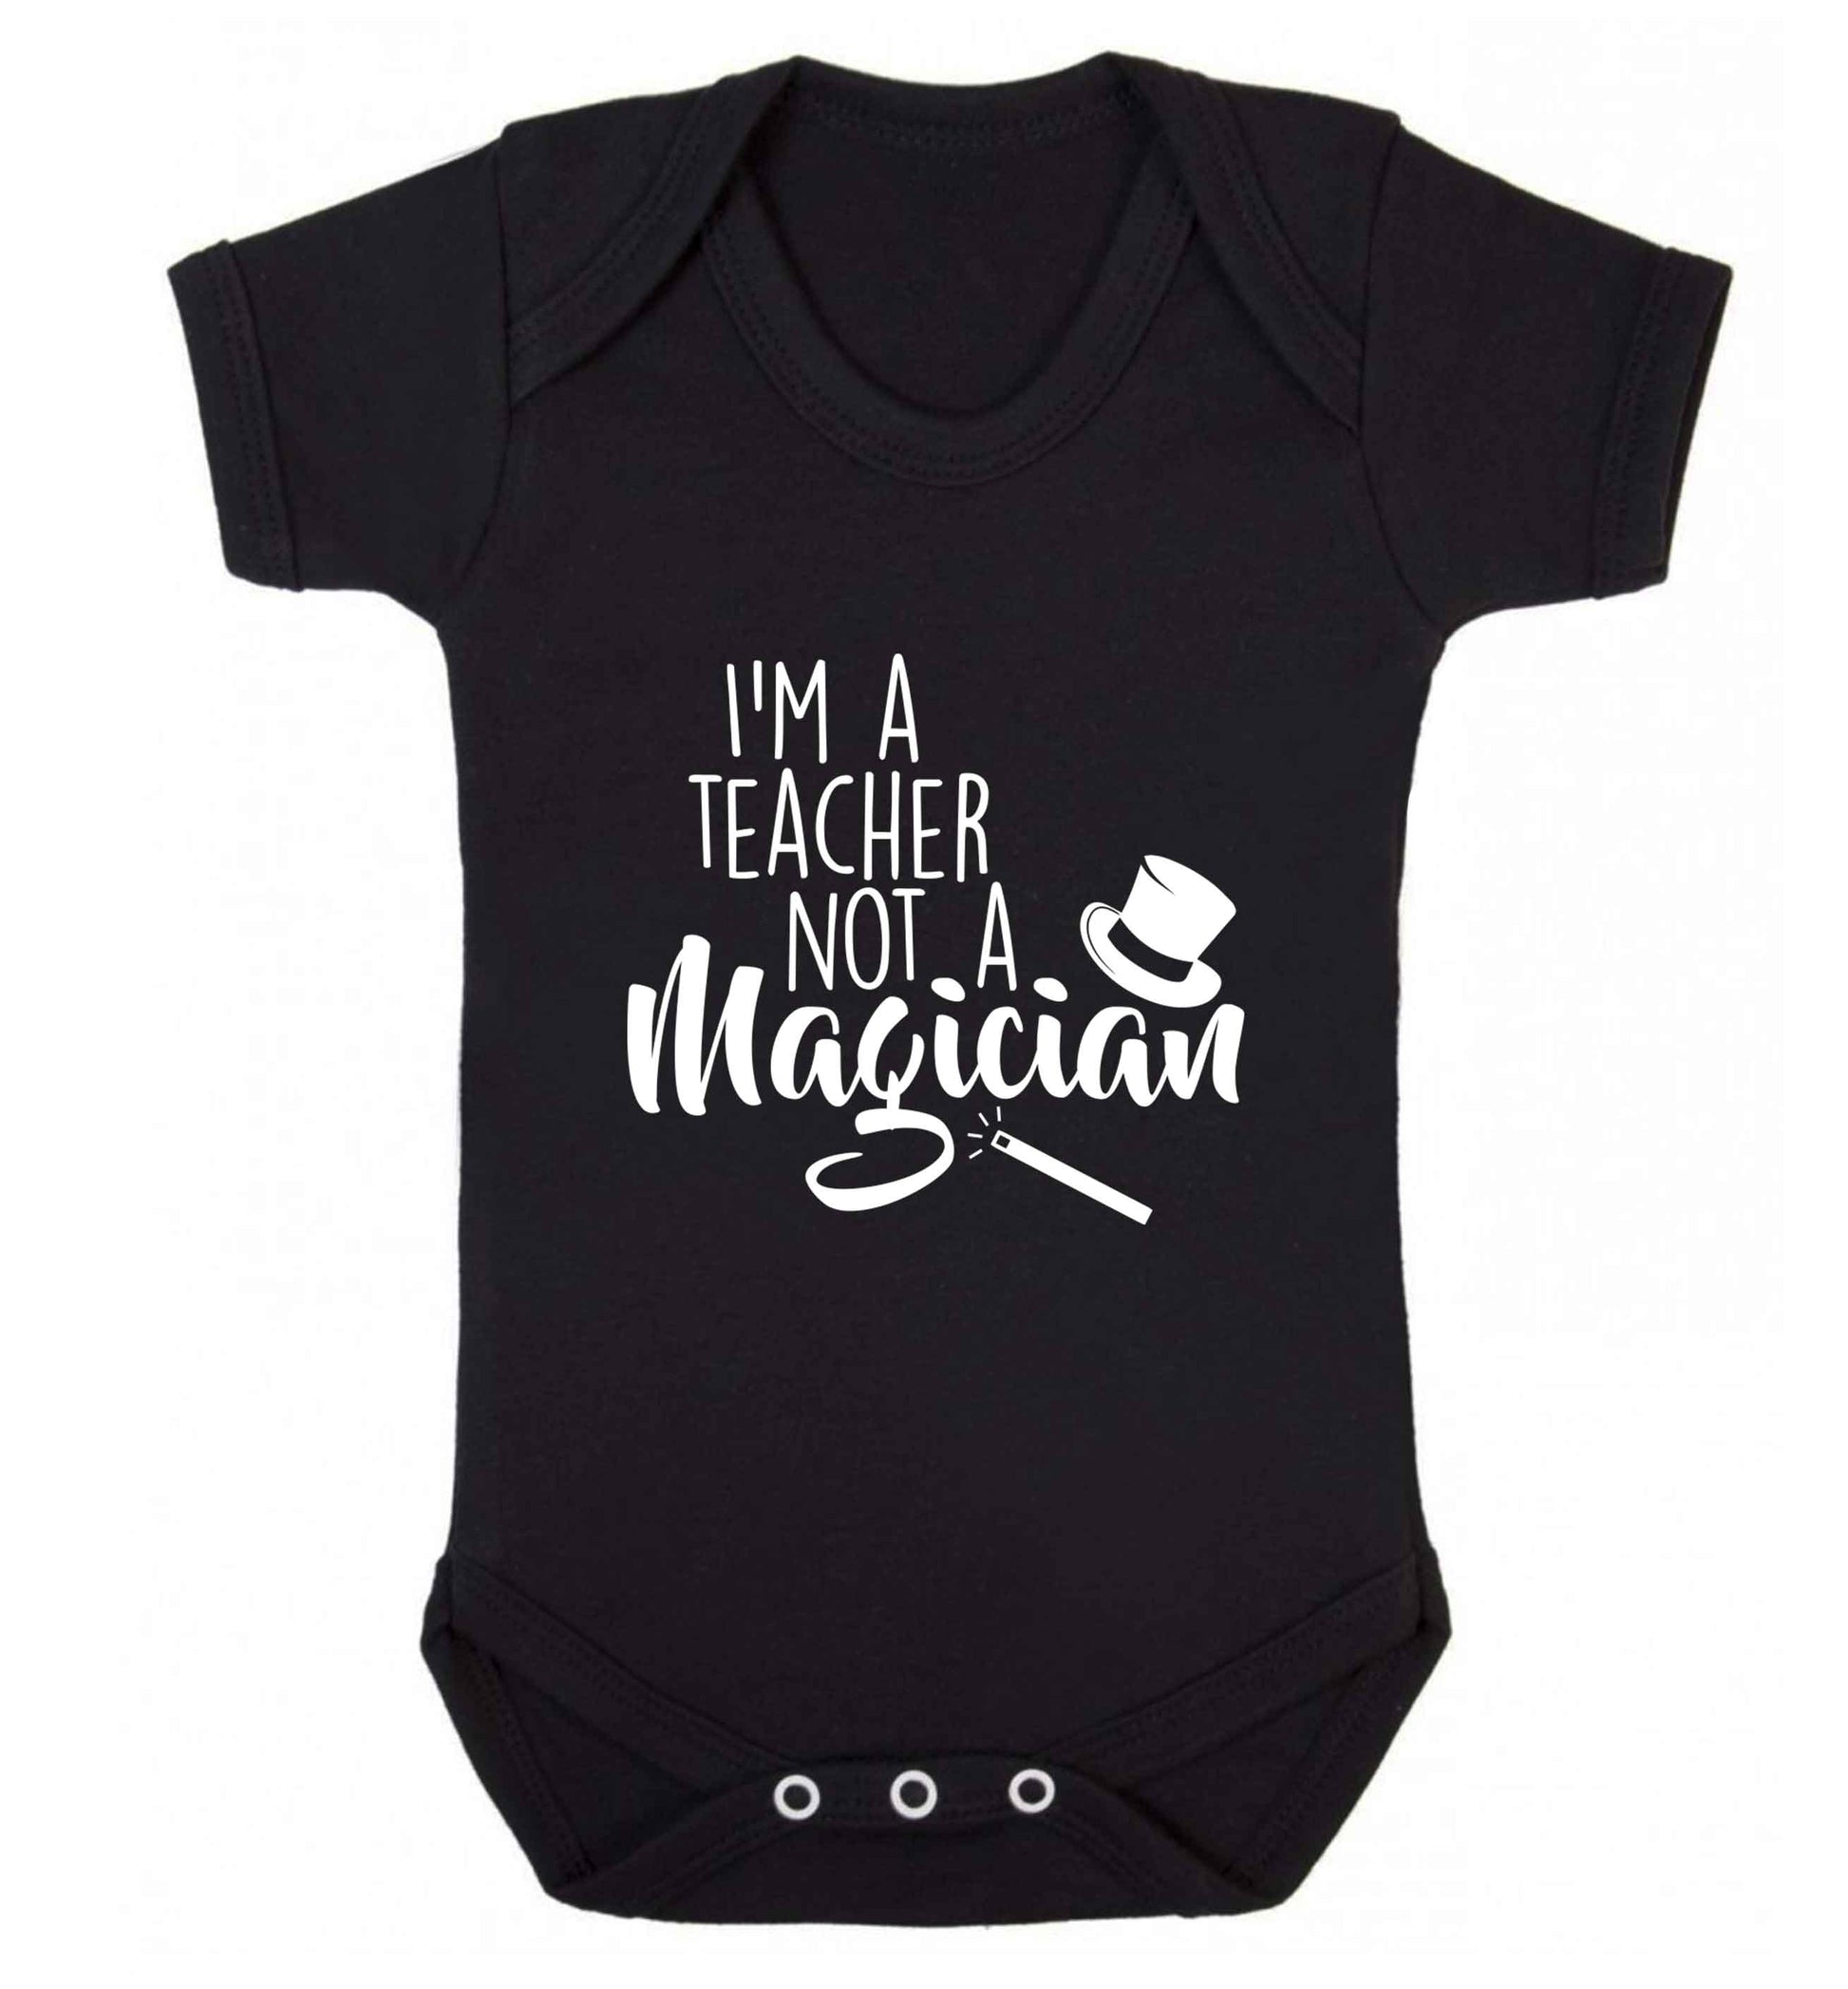 I'm a teacher not a magician baby vest black 18-24 months